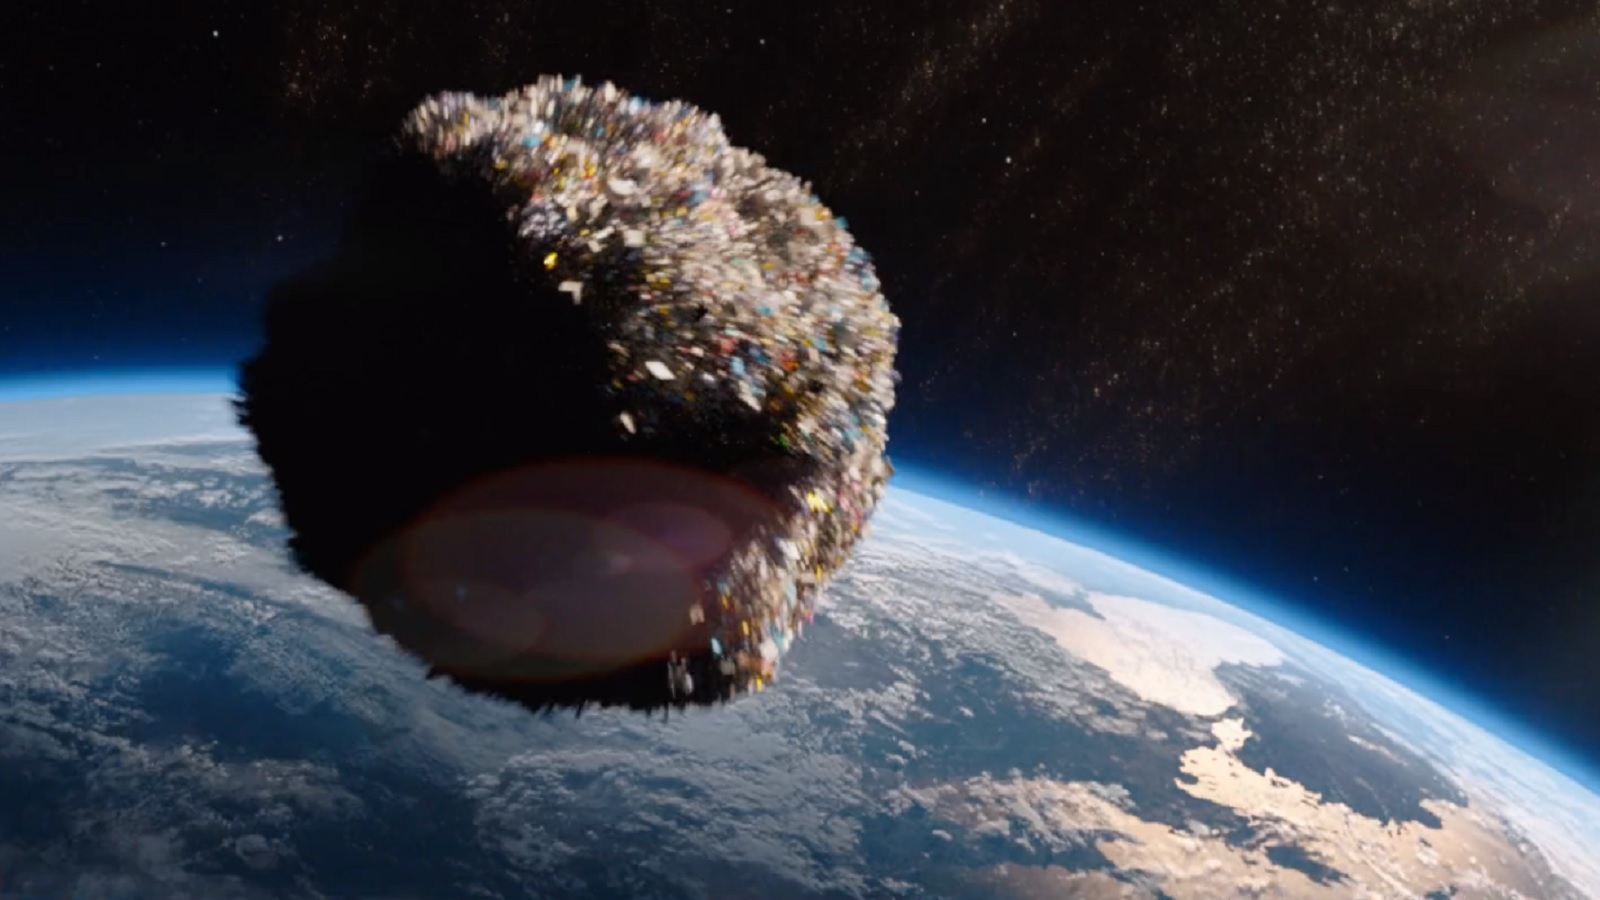 Rubbish Meteor Destroyed by Eco-Friendly Behavior